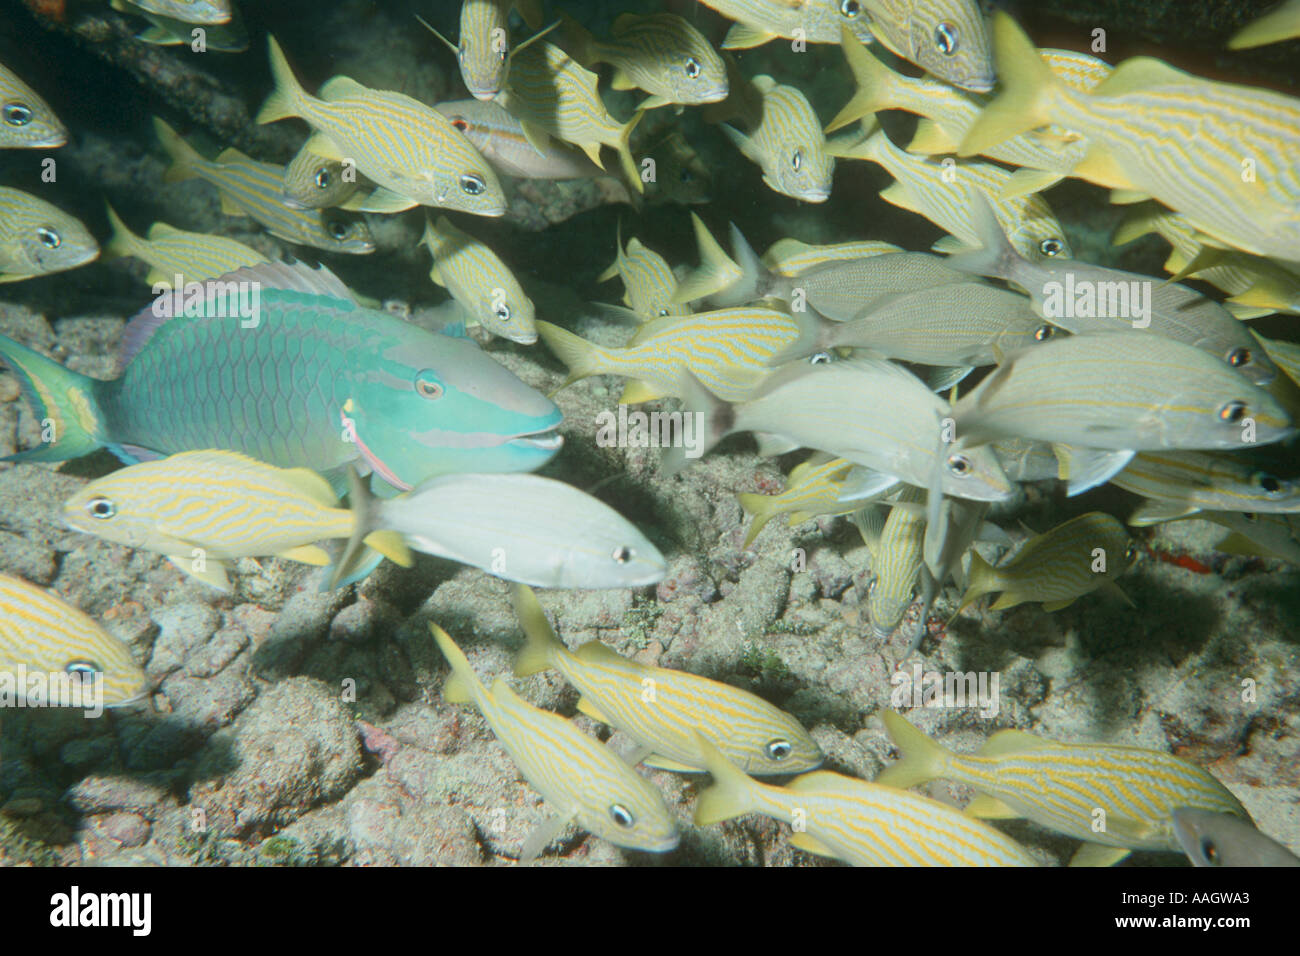 Stoplight parrotfish Sparisoma viride swims amongst grunts Haemulon spp John Pennekamp National Marine Sanctuary Florida USA Stock Photo